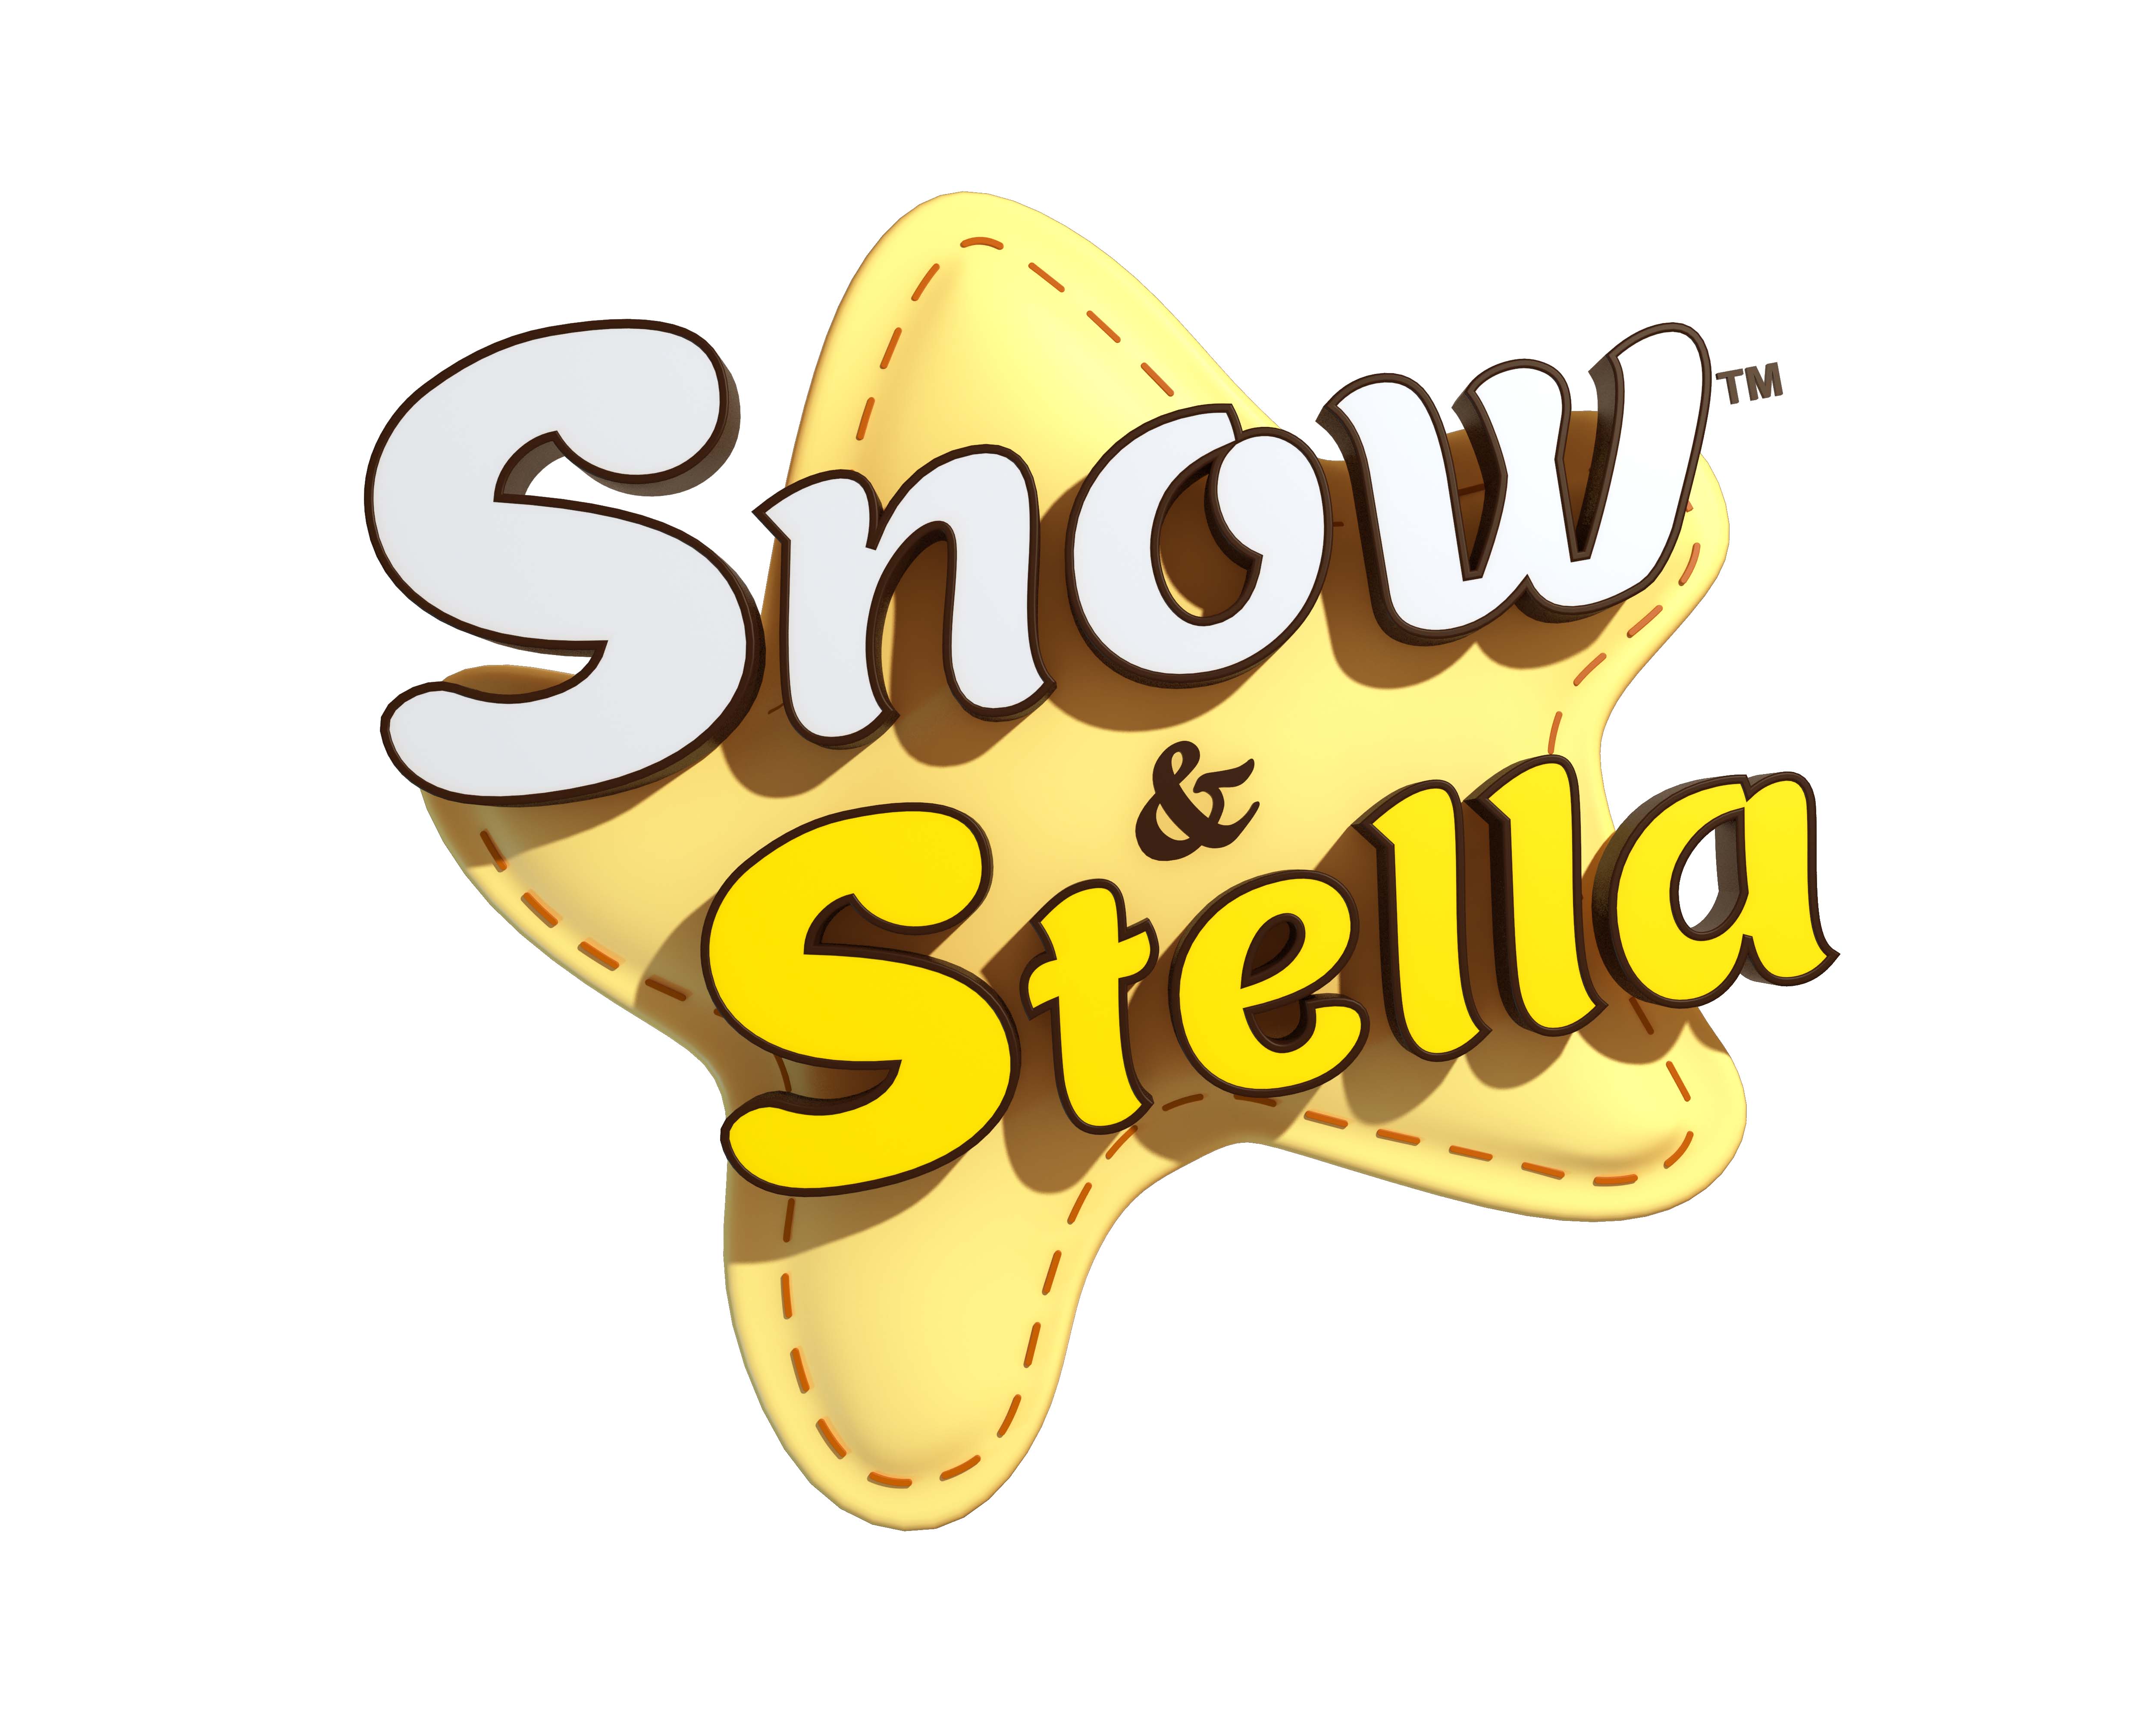 Snow et Stella (2)